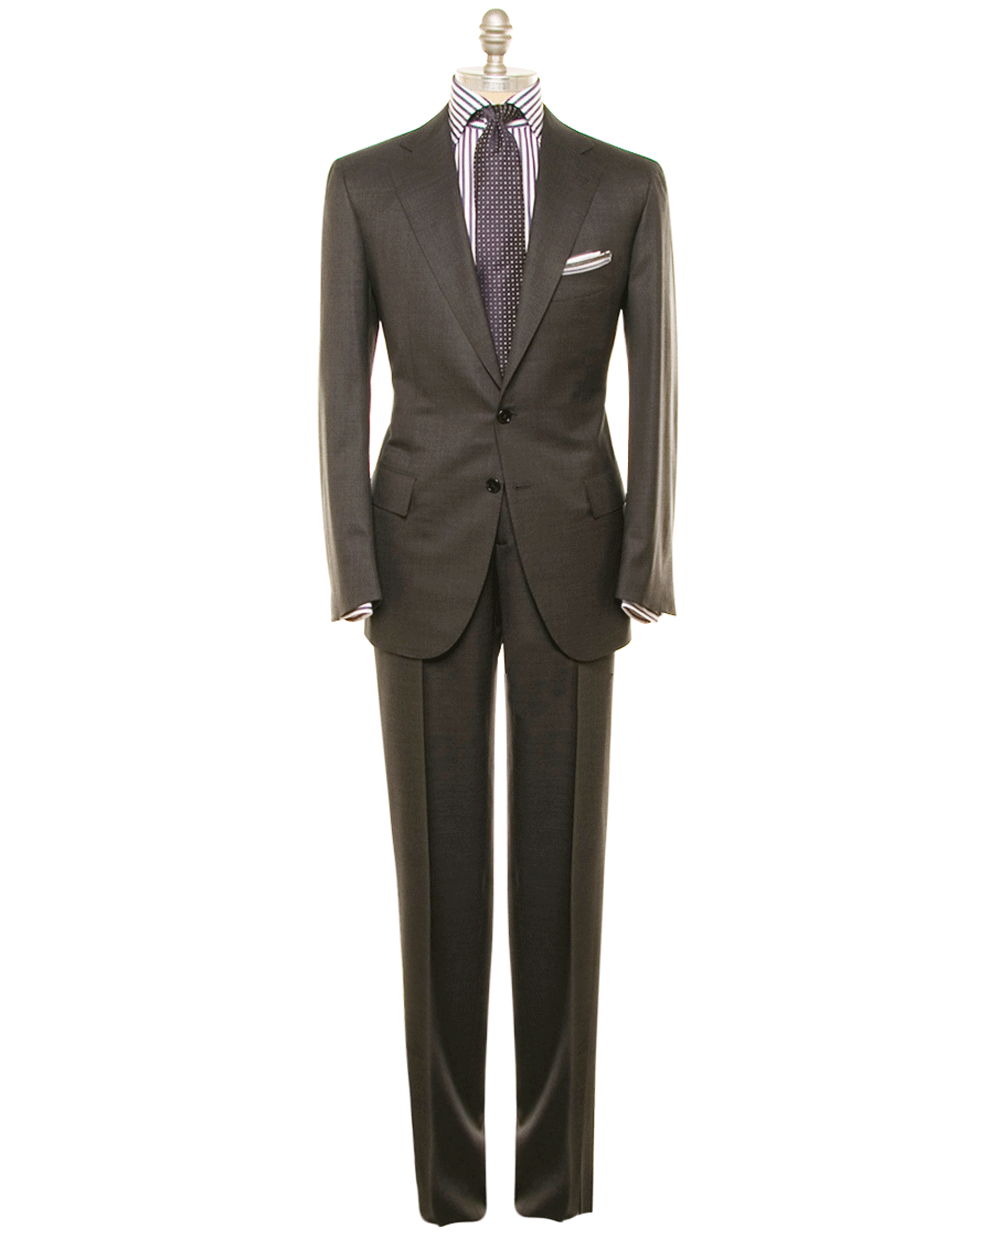 Charcoal Grey Melange Suit